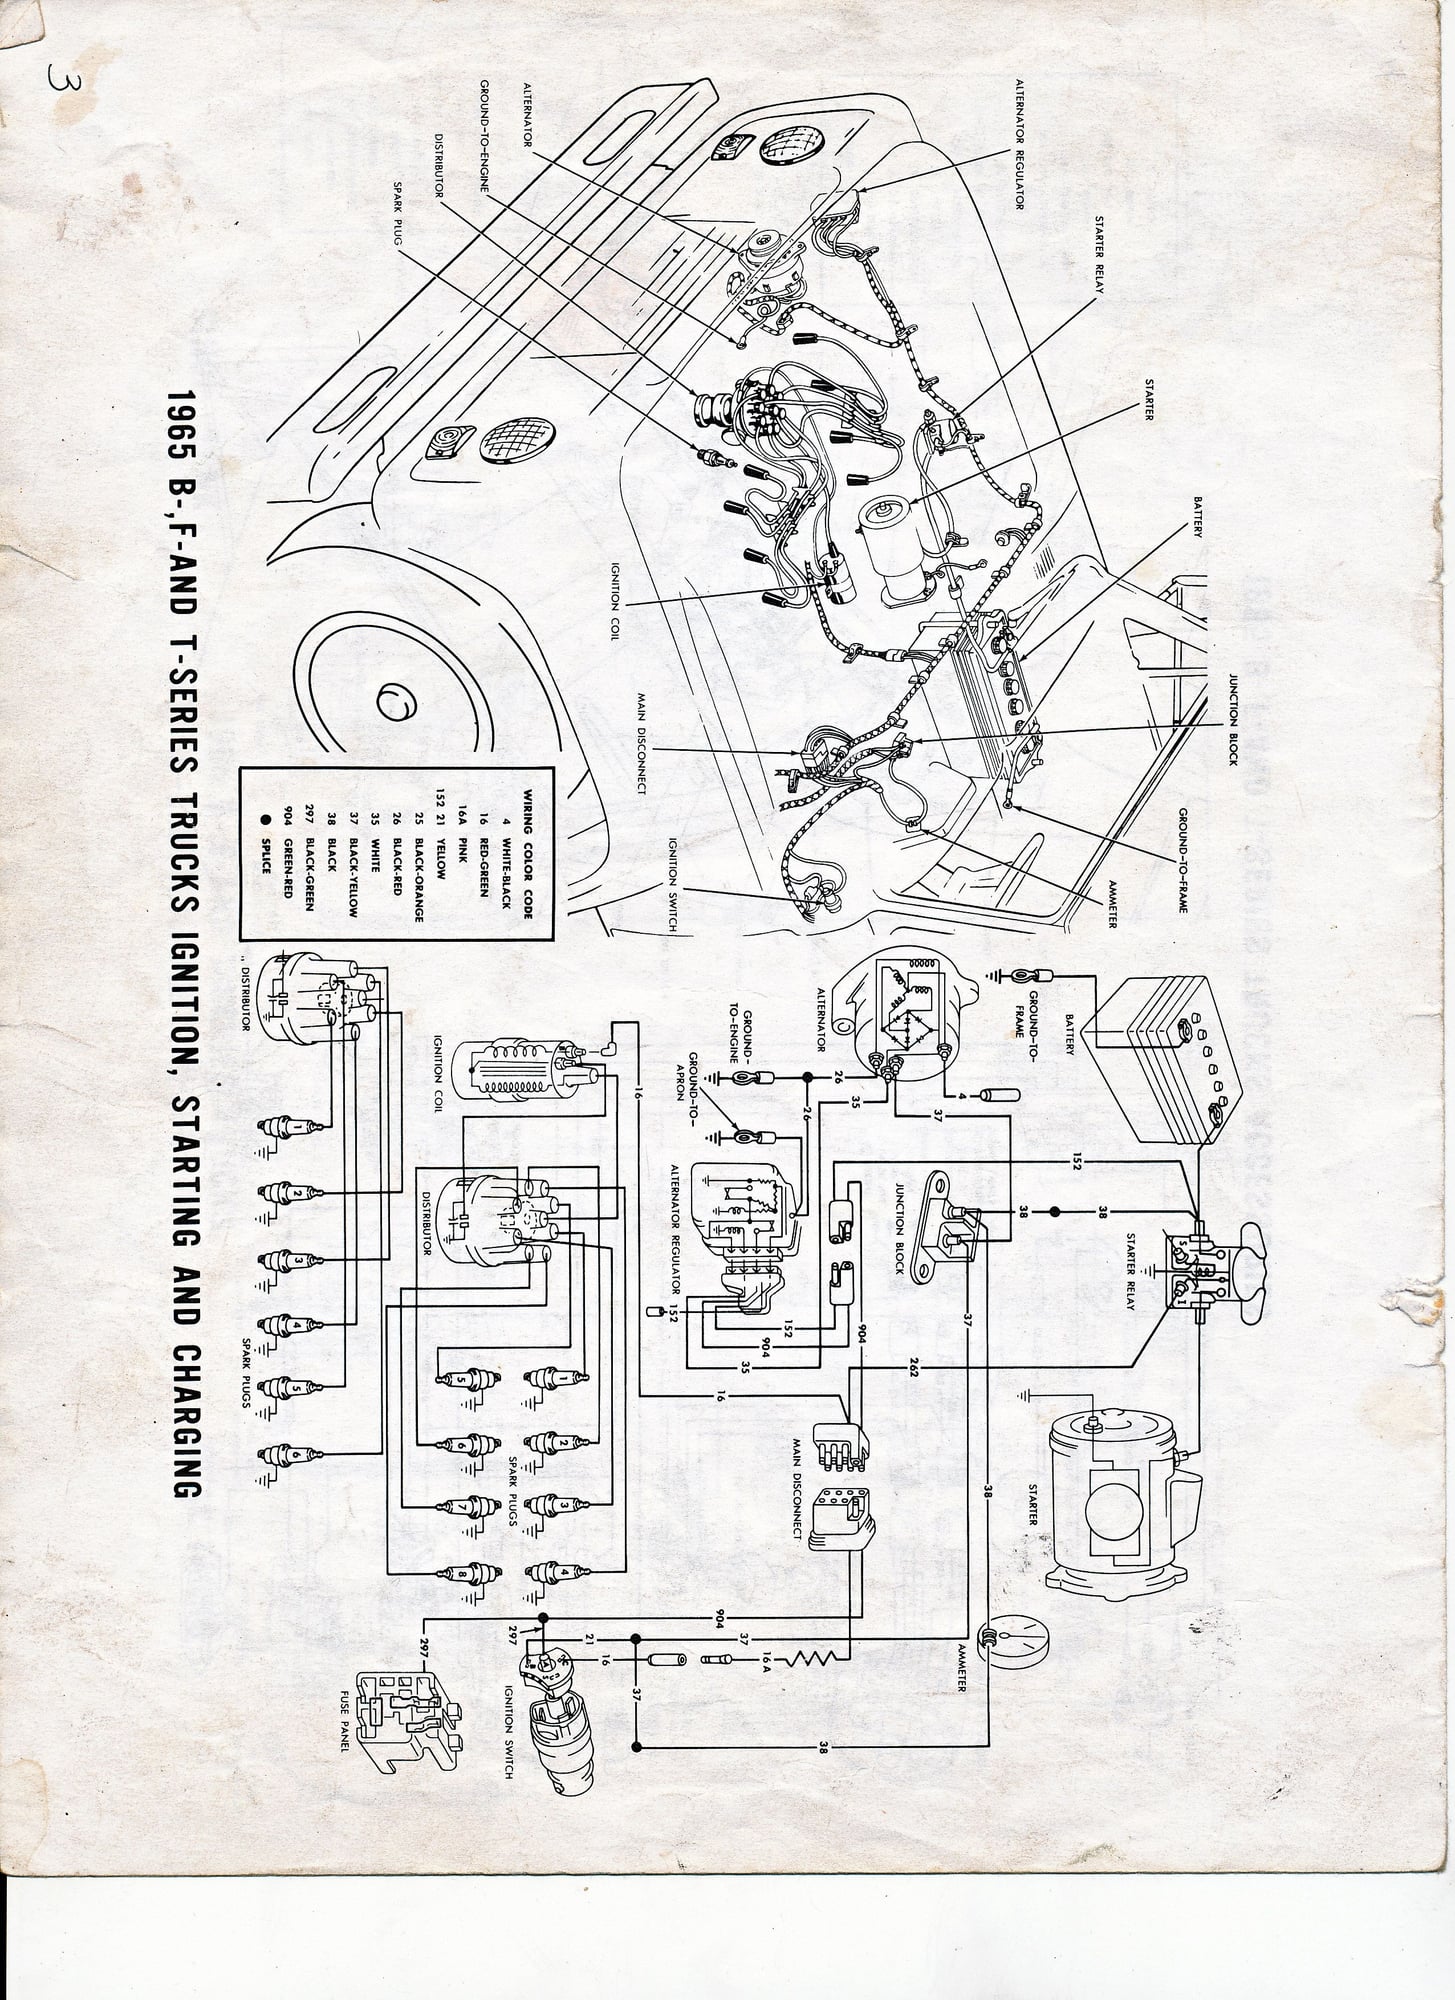 1975 Ford Truck Wiring Diagram from cimg8.ibsrv.net